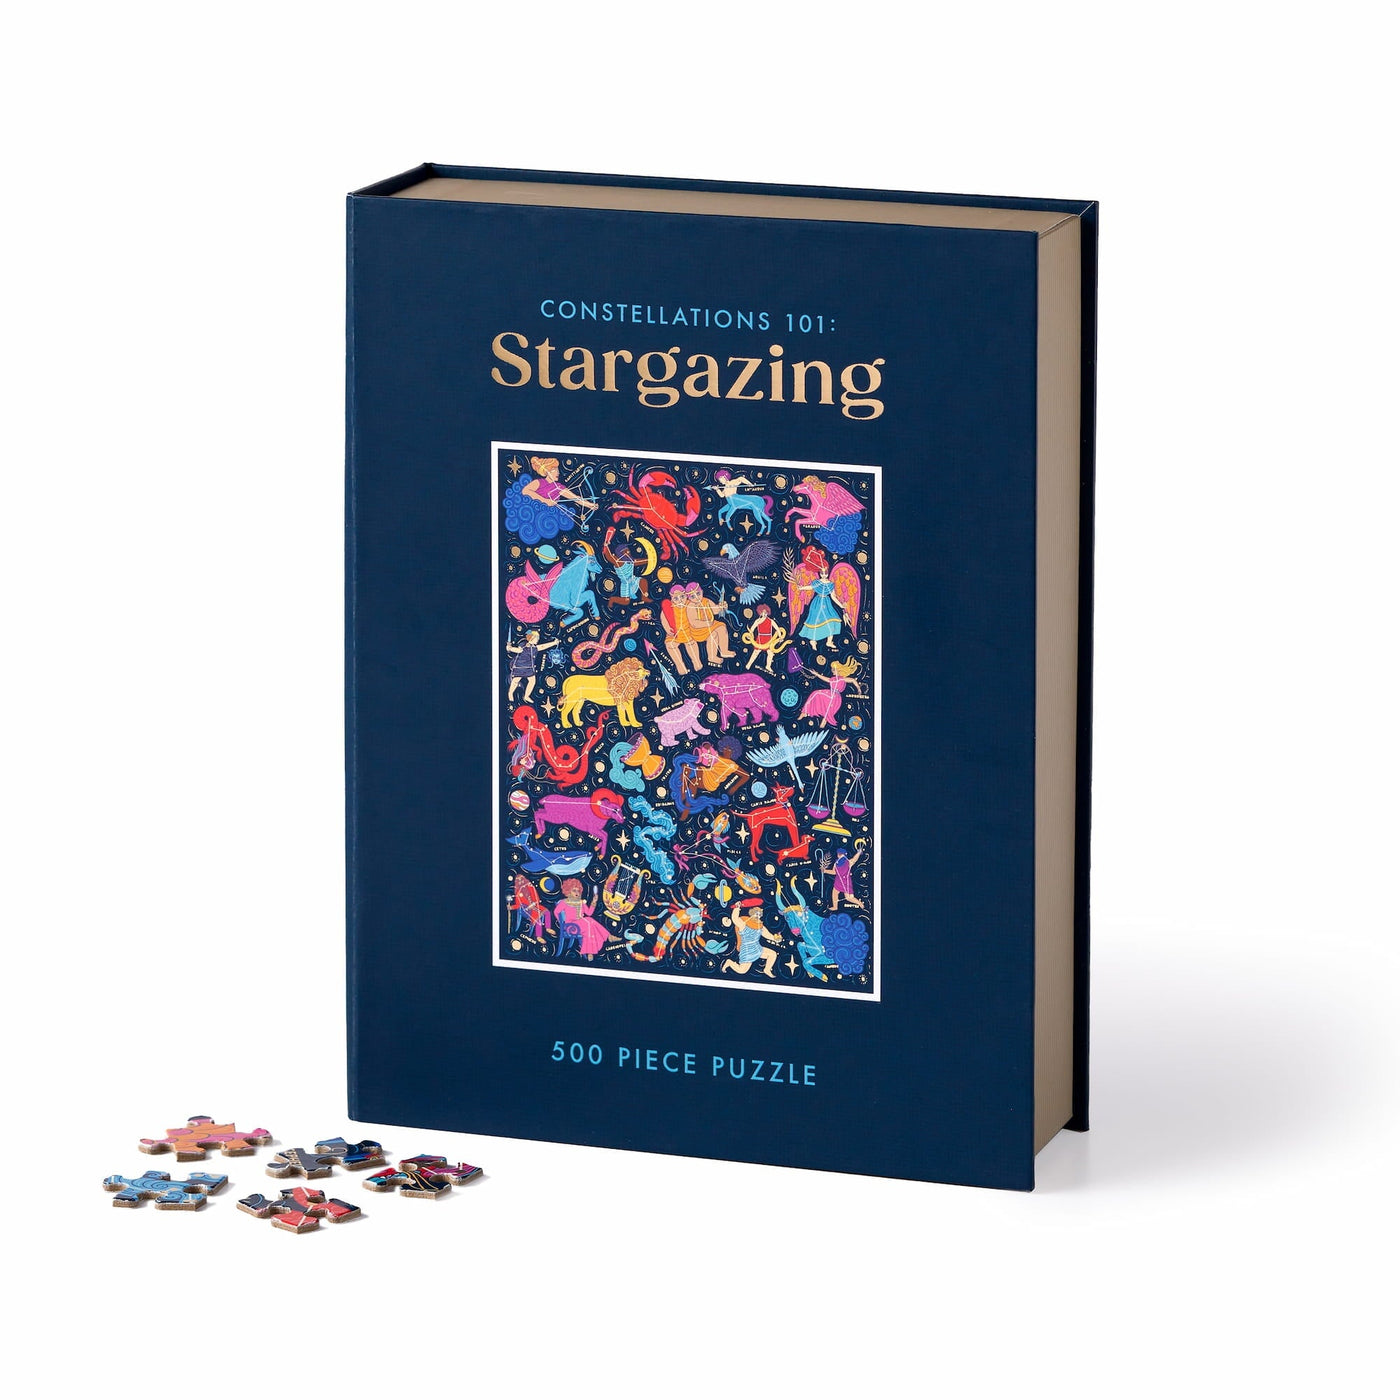 Constellations 101: Stargazing | 500 Piece Jigsaw Puzzle